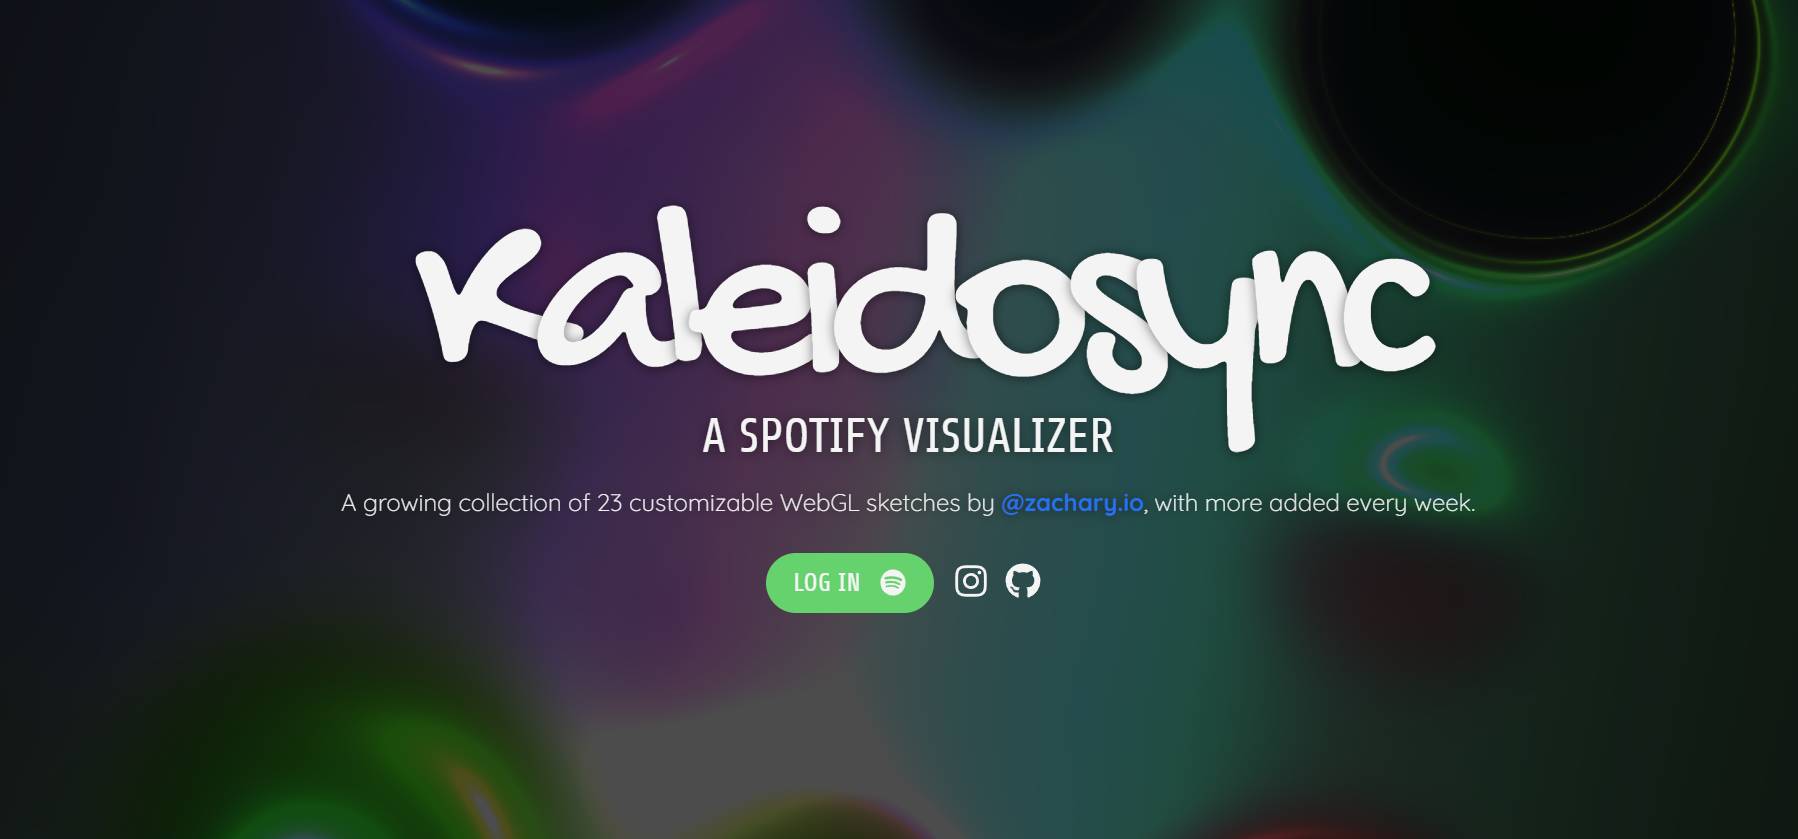   Spotify 名為 Kaleidosync Visualizer 的可視化工具可以在 Web 上使用